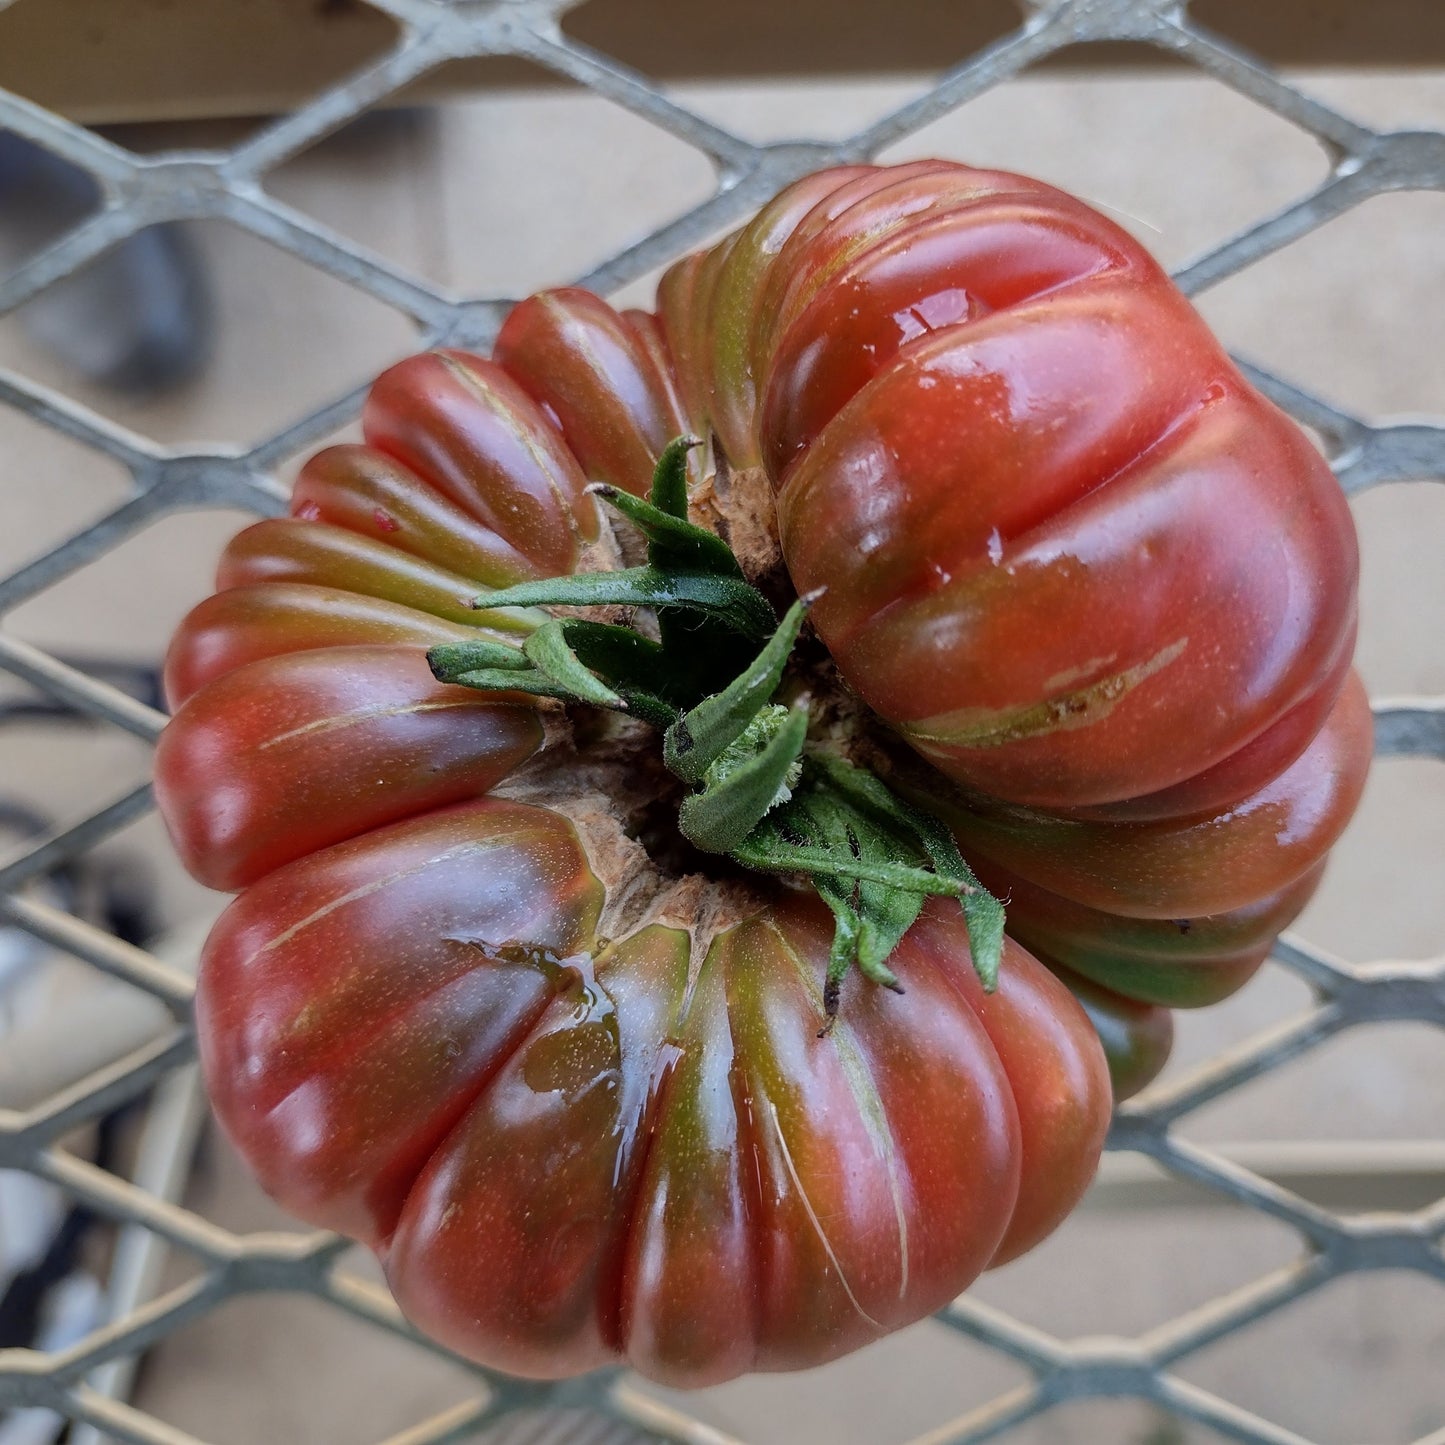 Purple Calabash Tomato